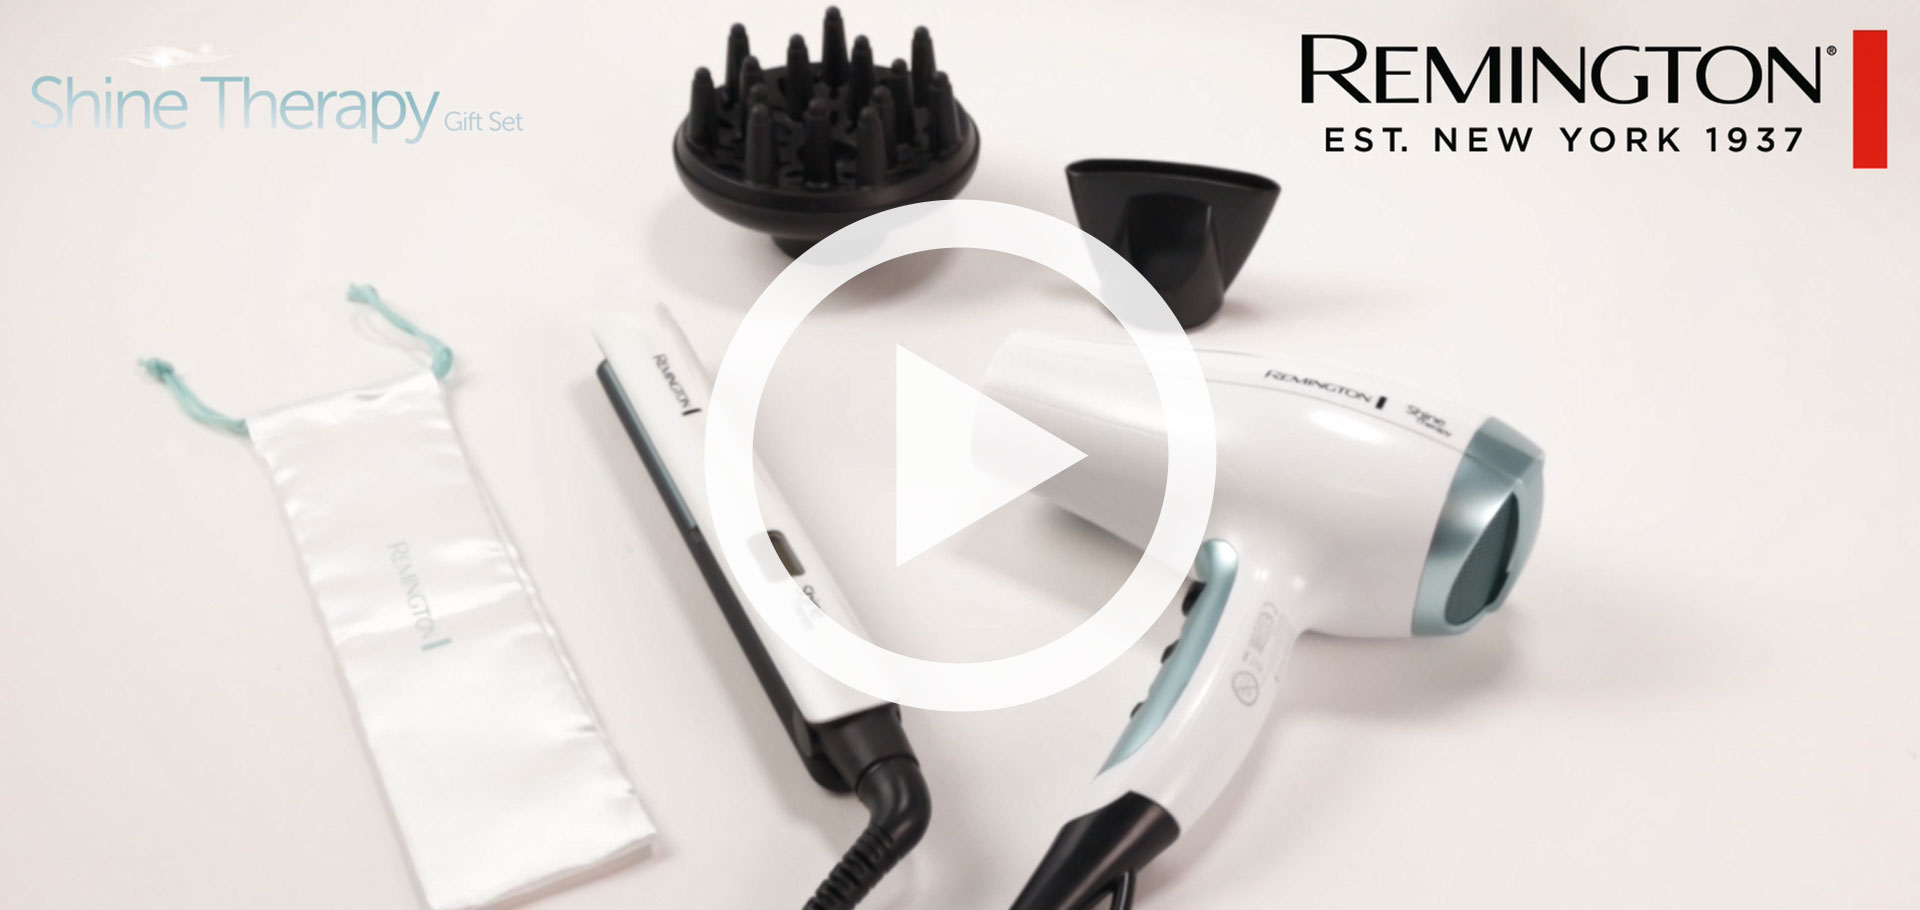 Giftset Remington Therapy Haircare Shine |